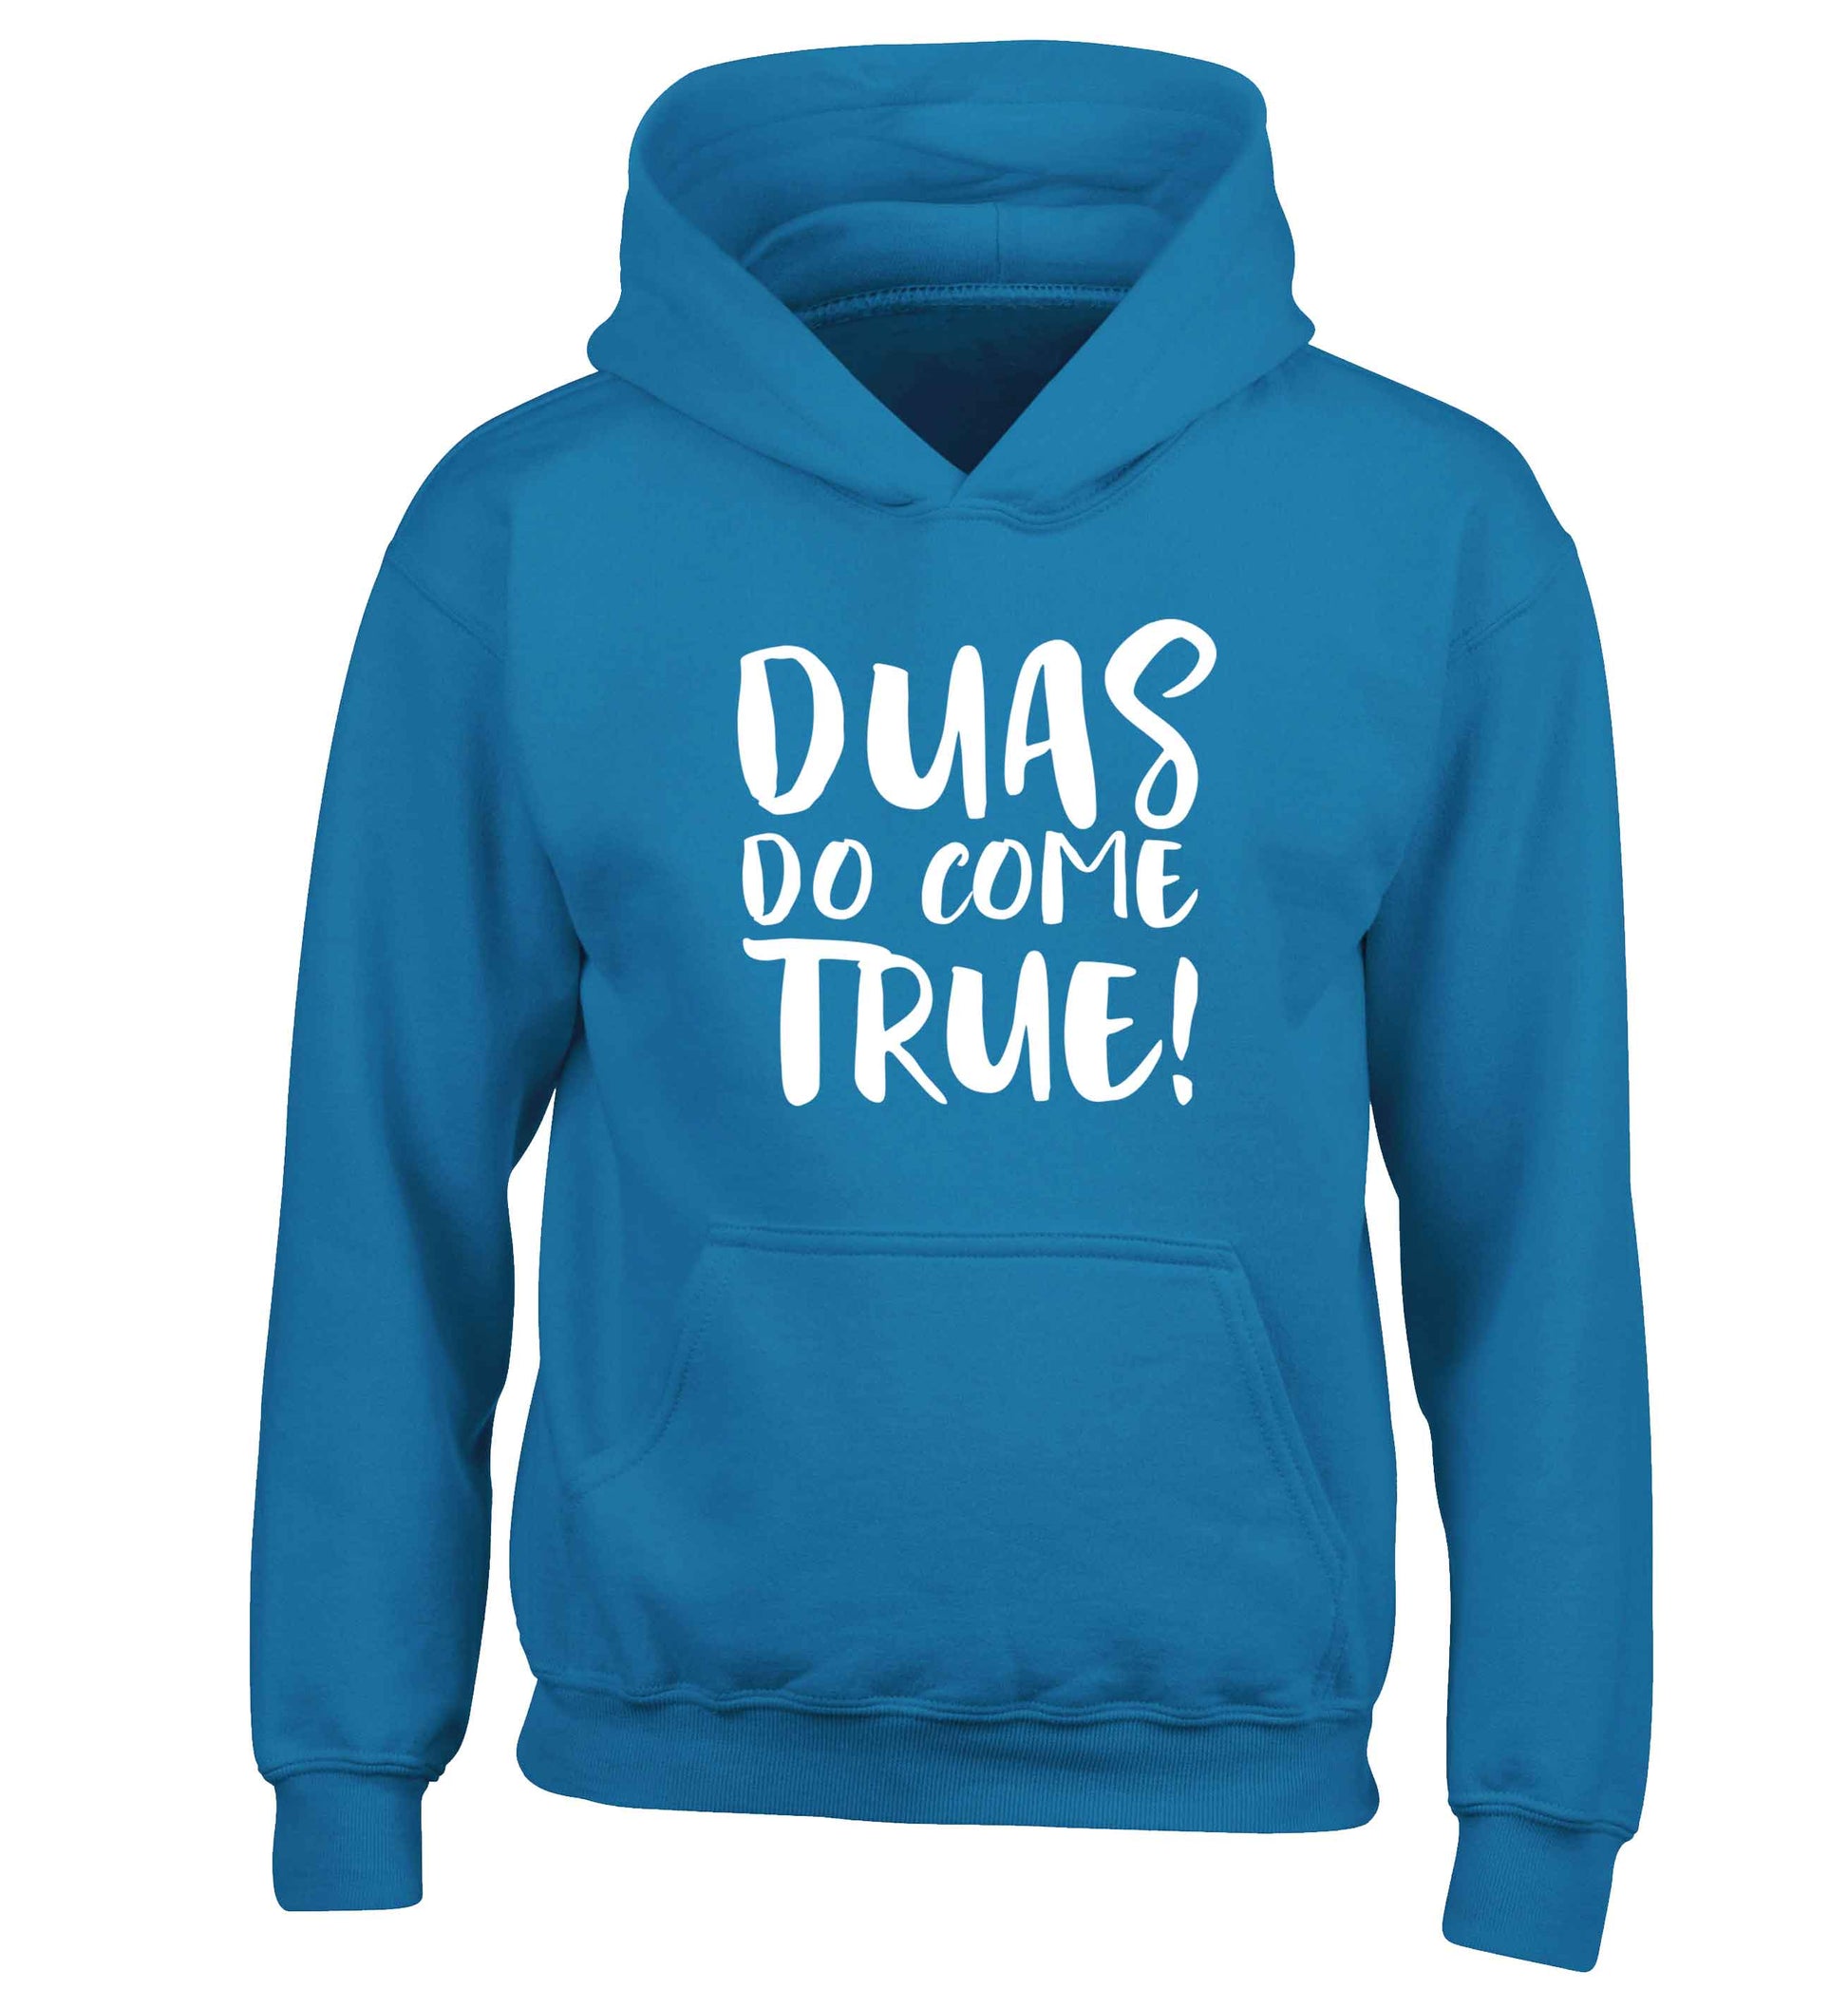 Duas do come true children's blue hoodie 12-13 Years